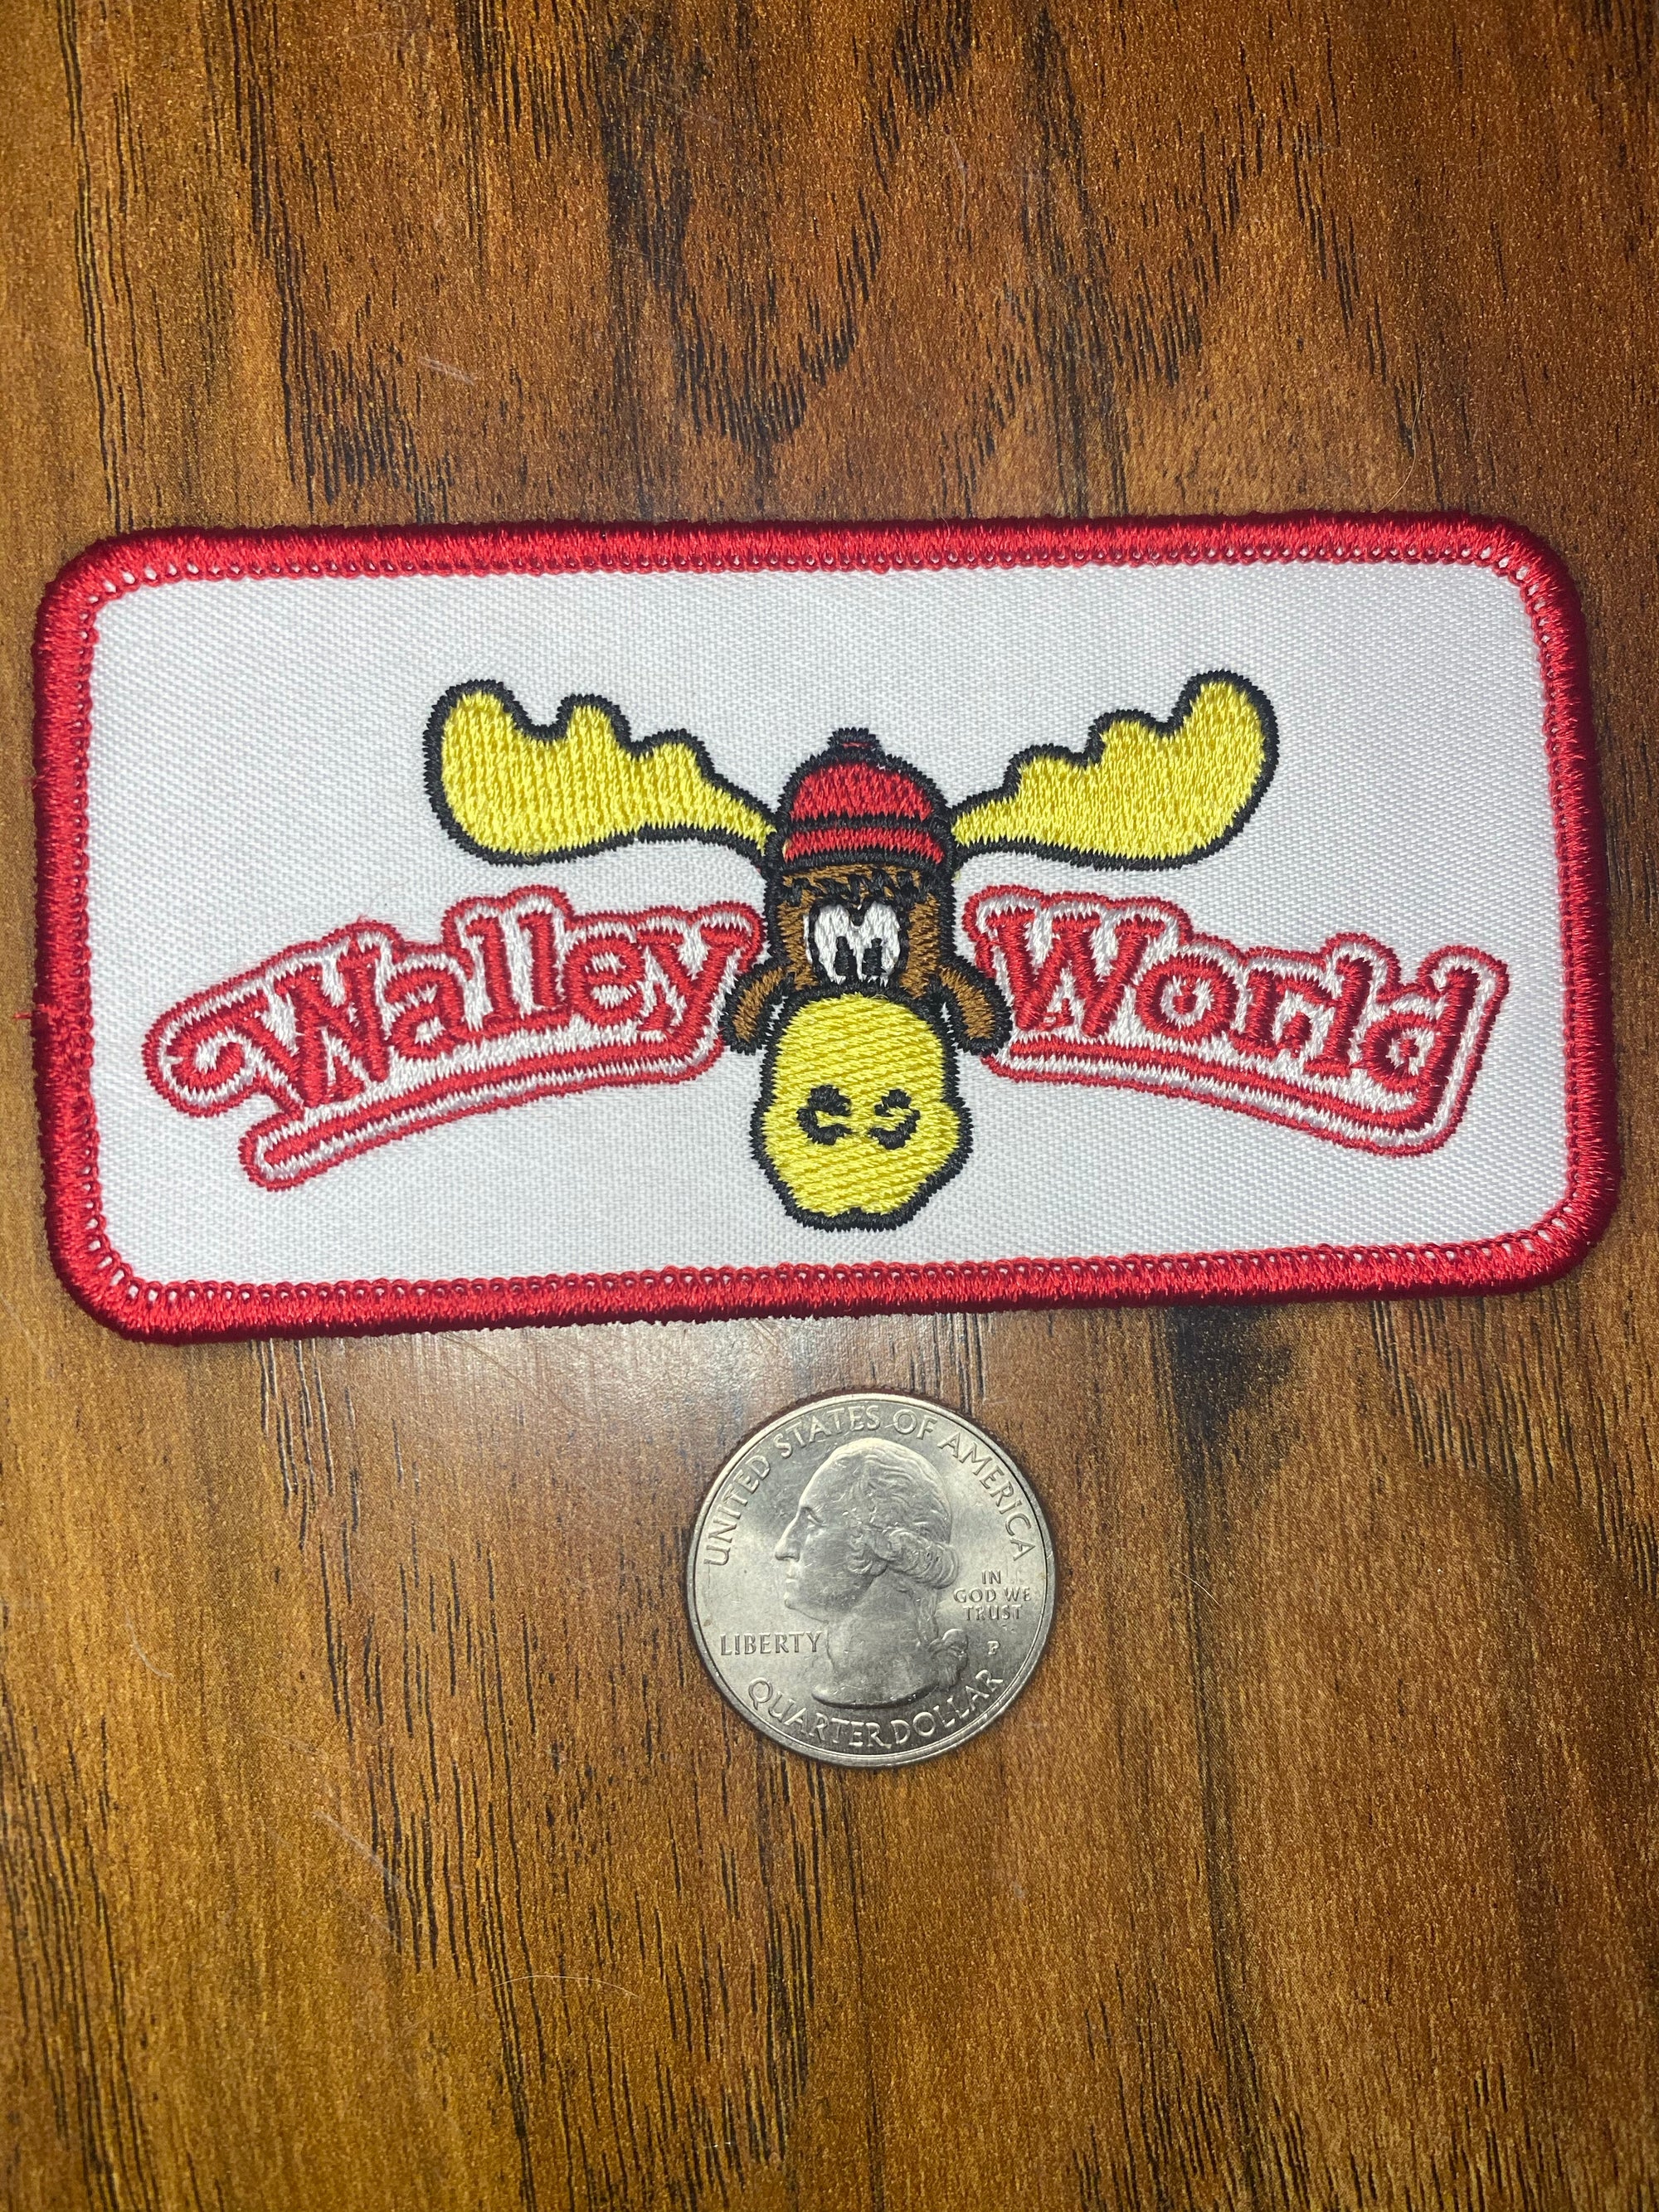 Walley world